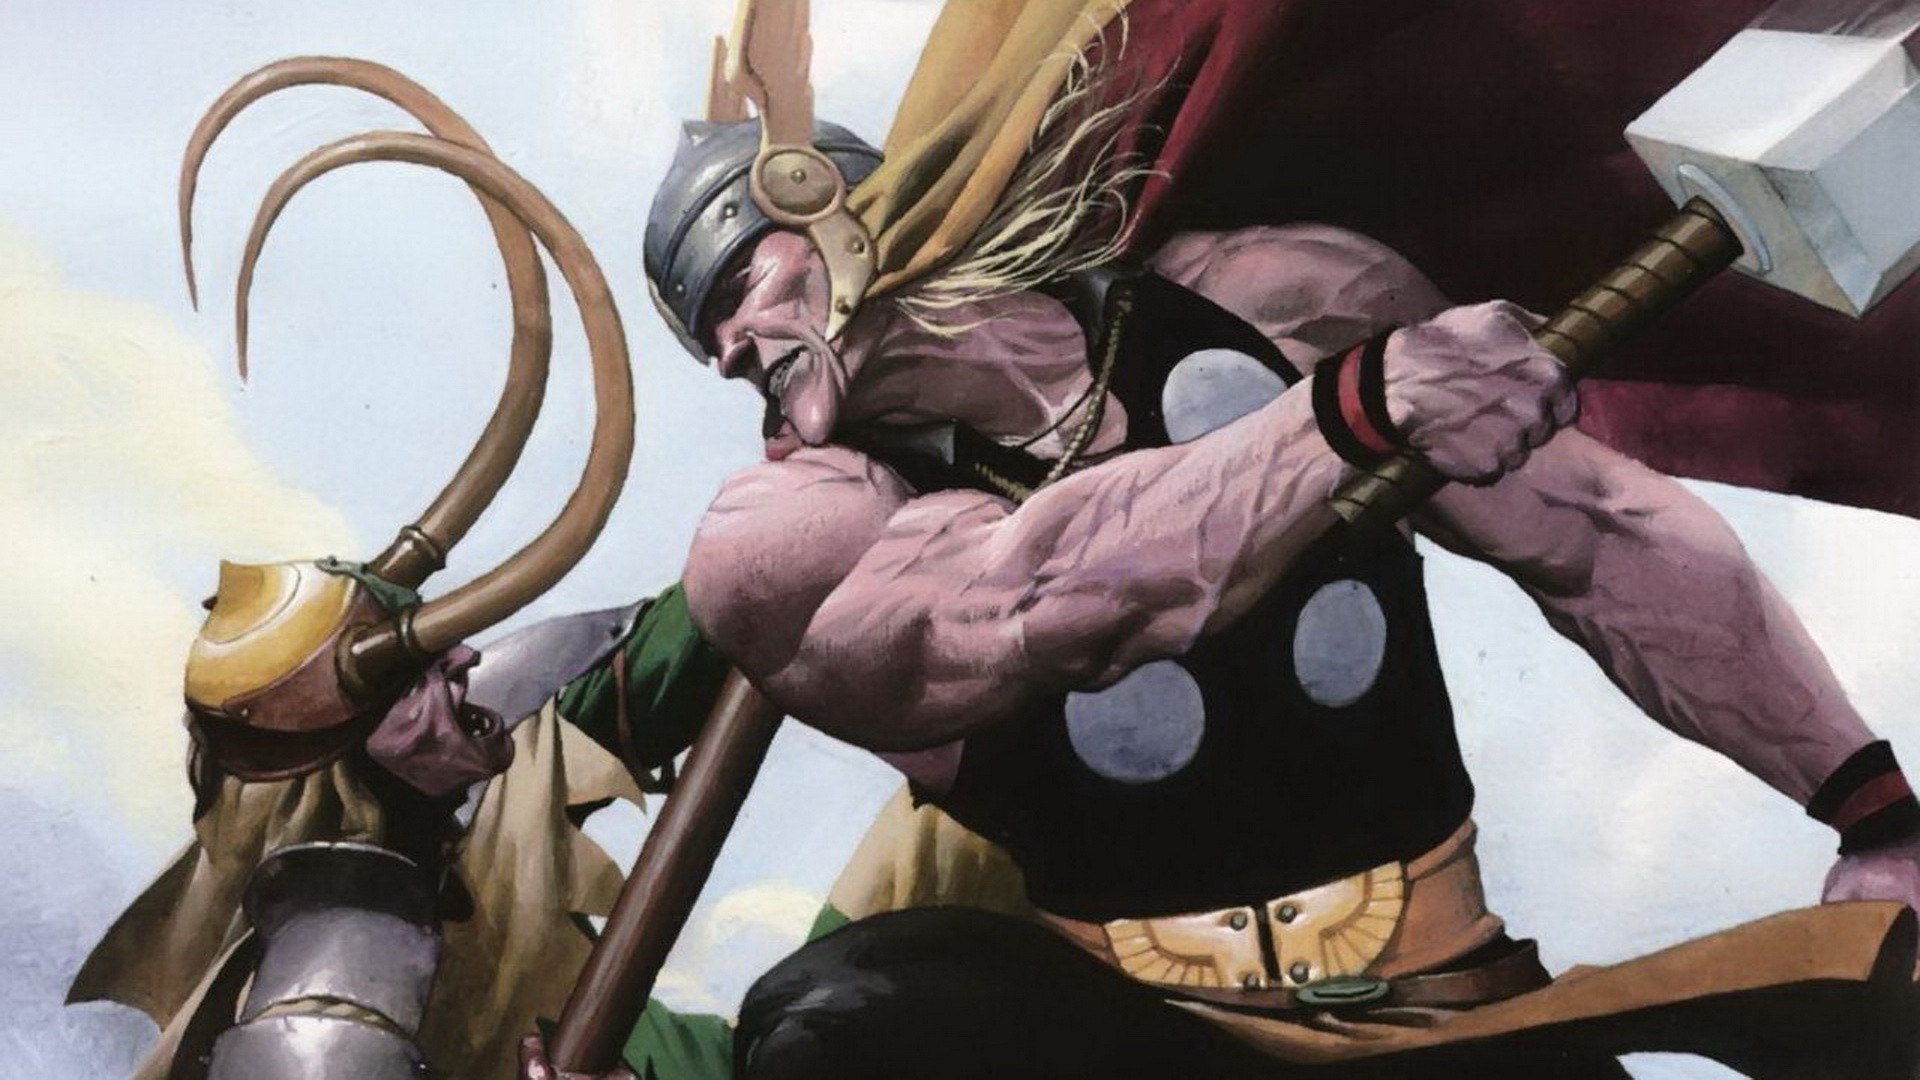 General 1920x1080 comics Thor Loki Marvel Comics superhero comic art cape muscles muscular men hammer helmet artwork digital art